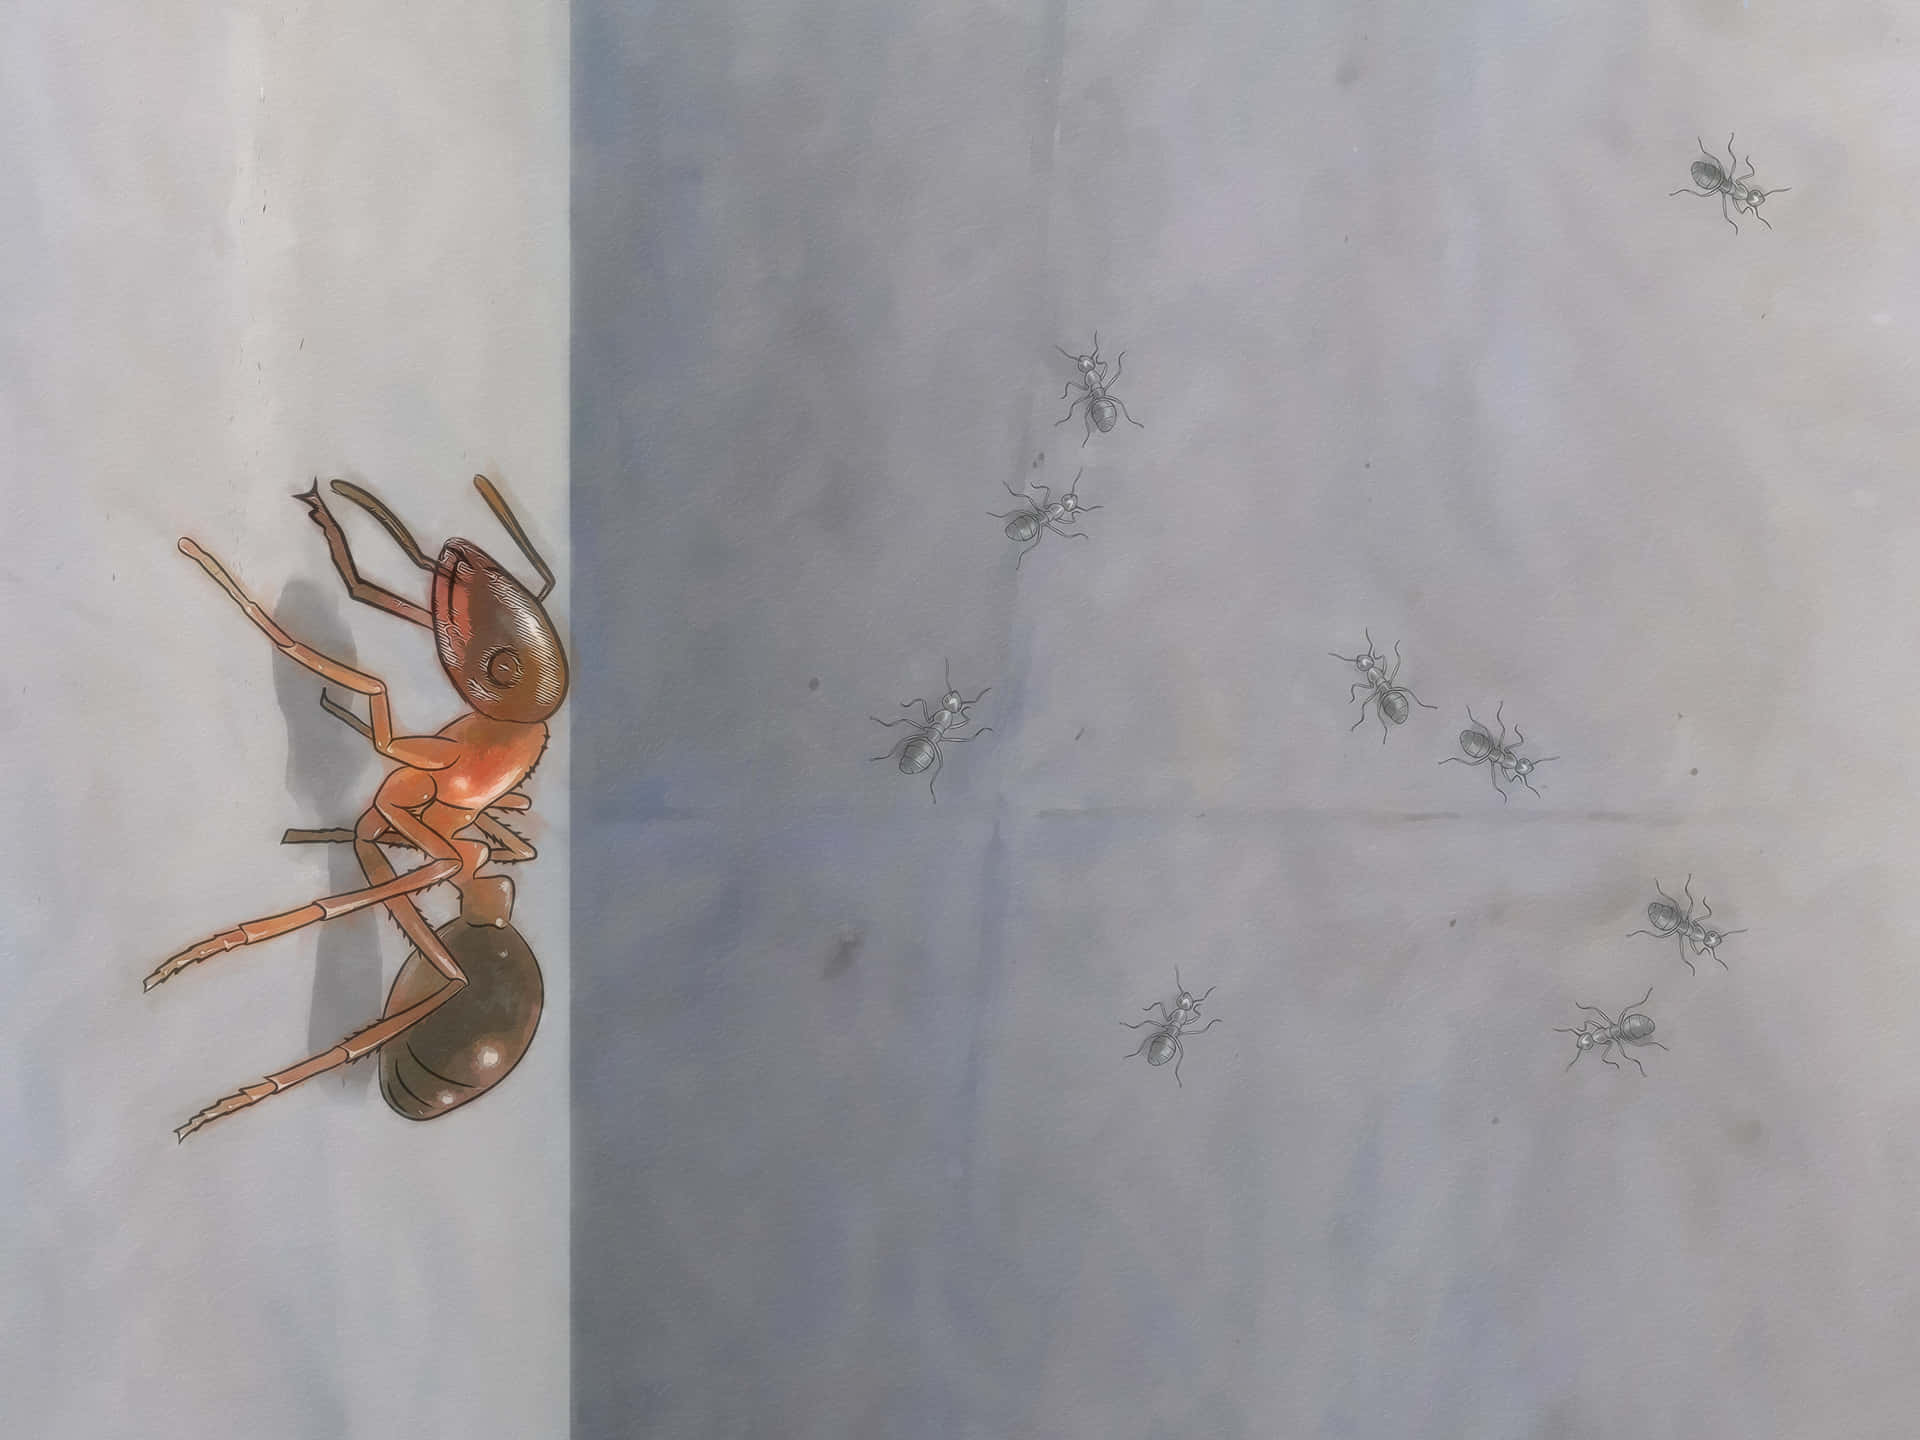 Argentine Ant Exploration Wallpaper